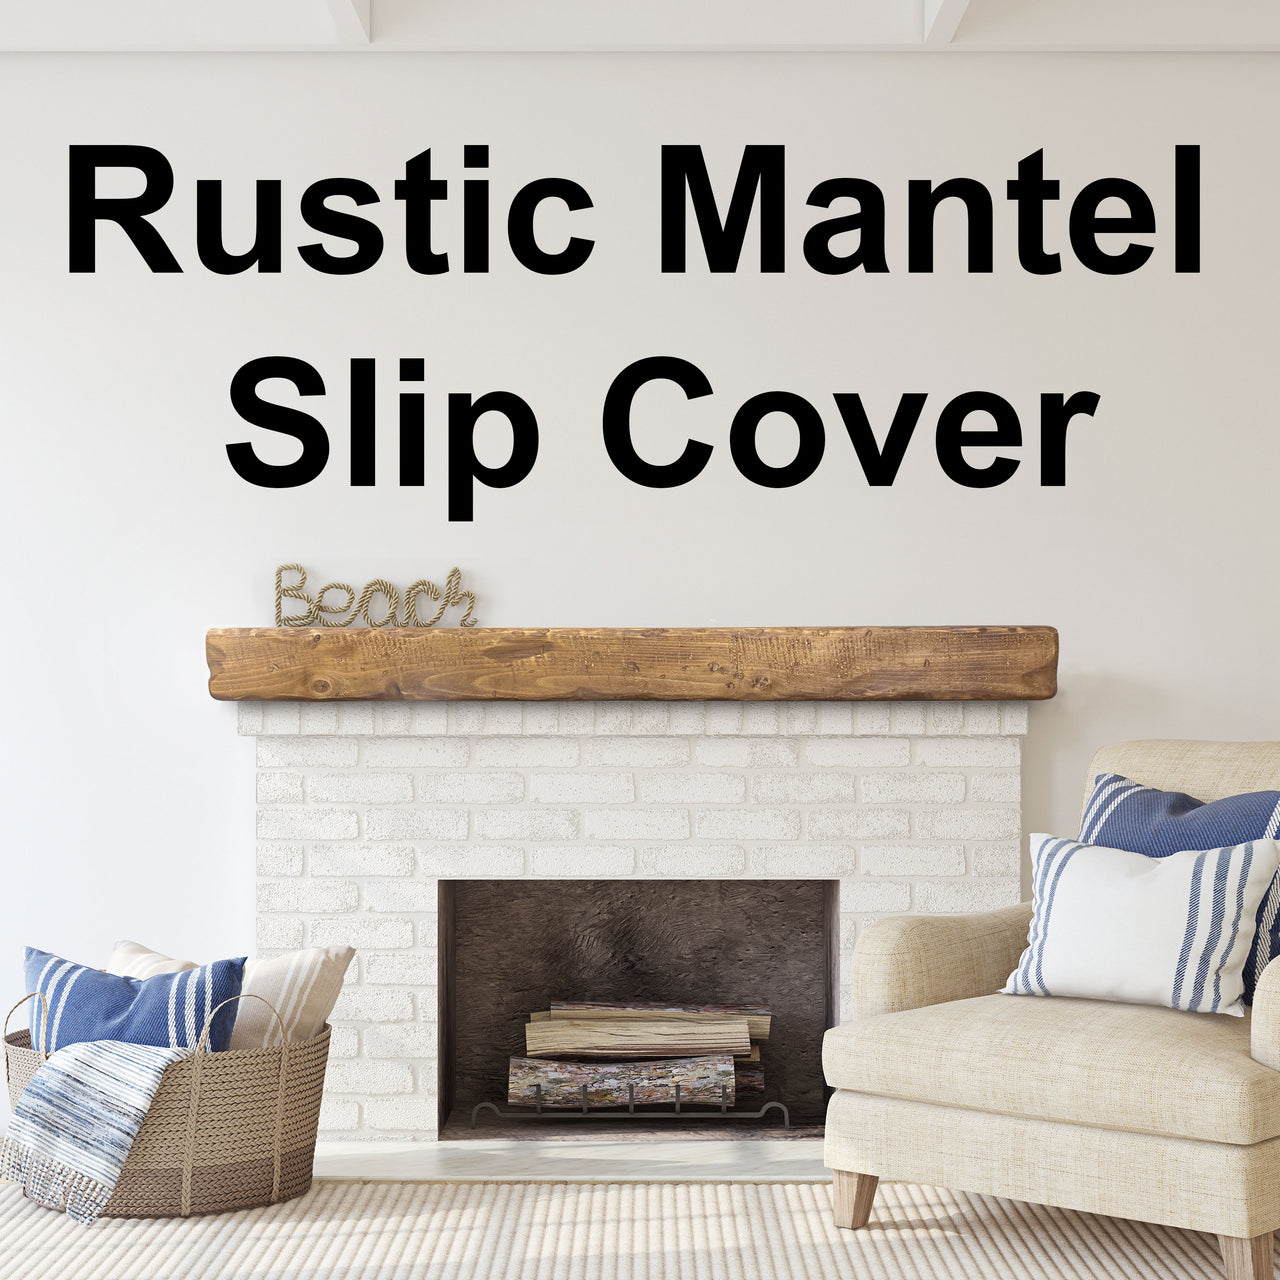 Rustic Mantel Slip Cover